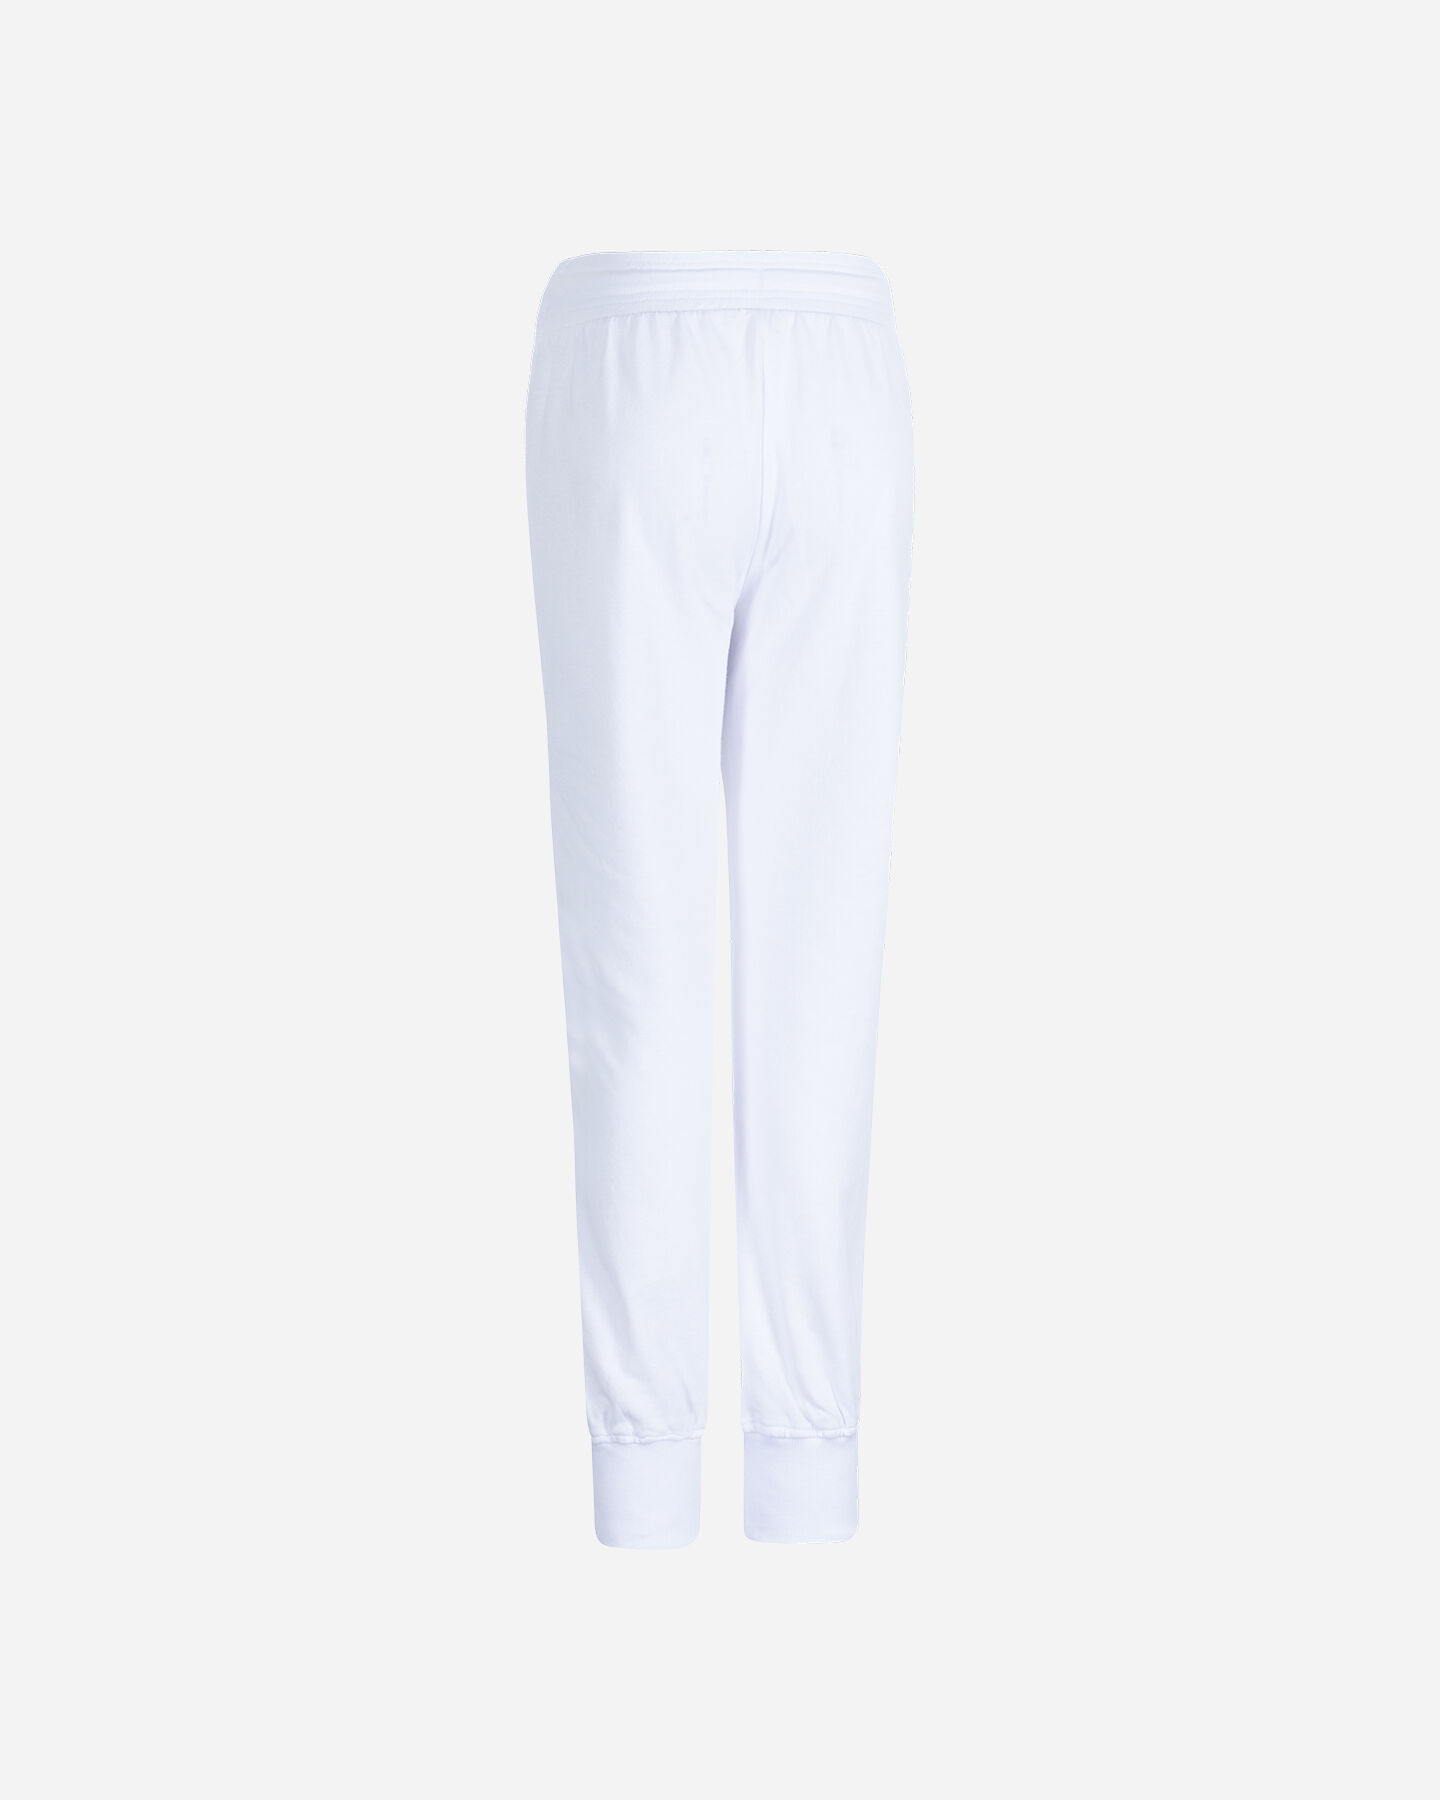  Pantalone ARENA ATHLETICS JR S4118892|001|10A scatto 1